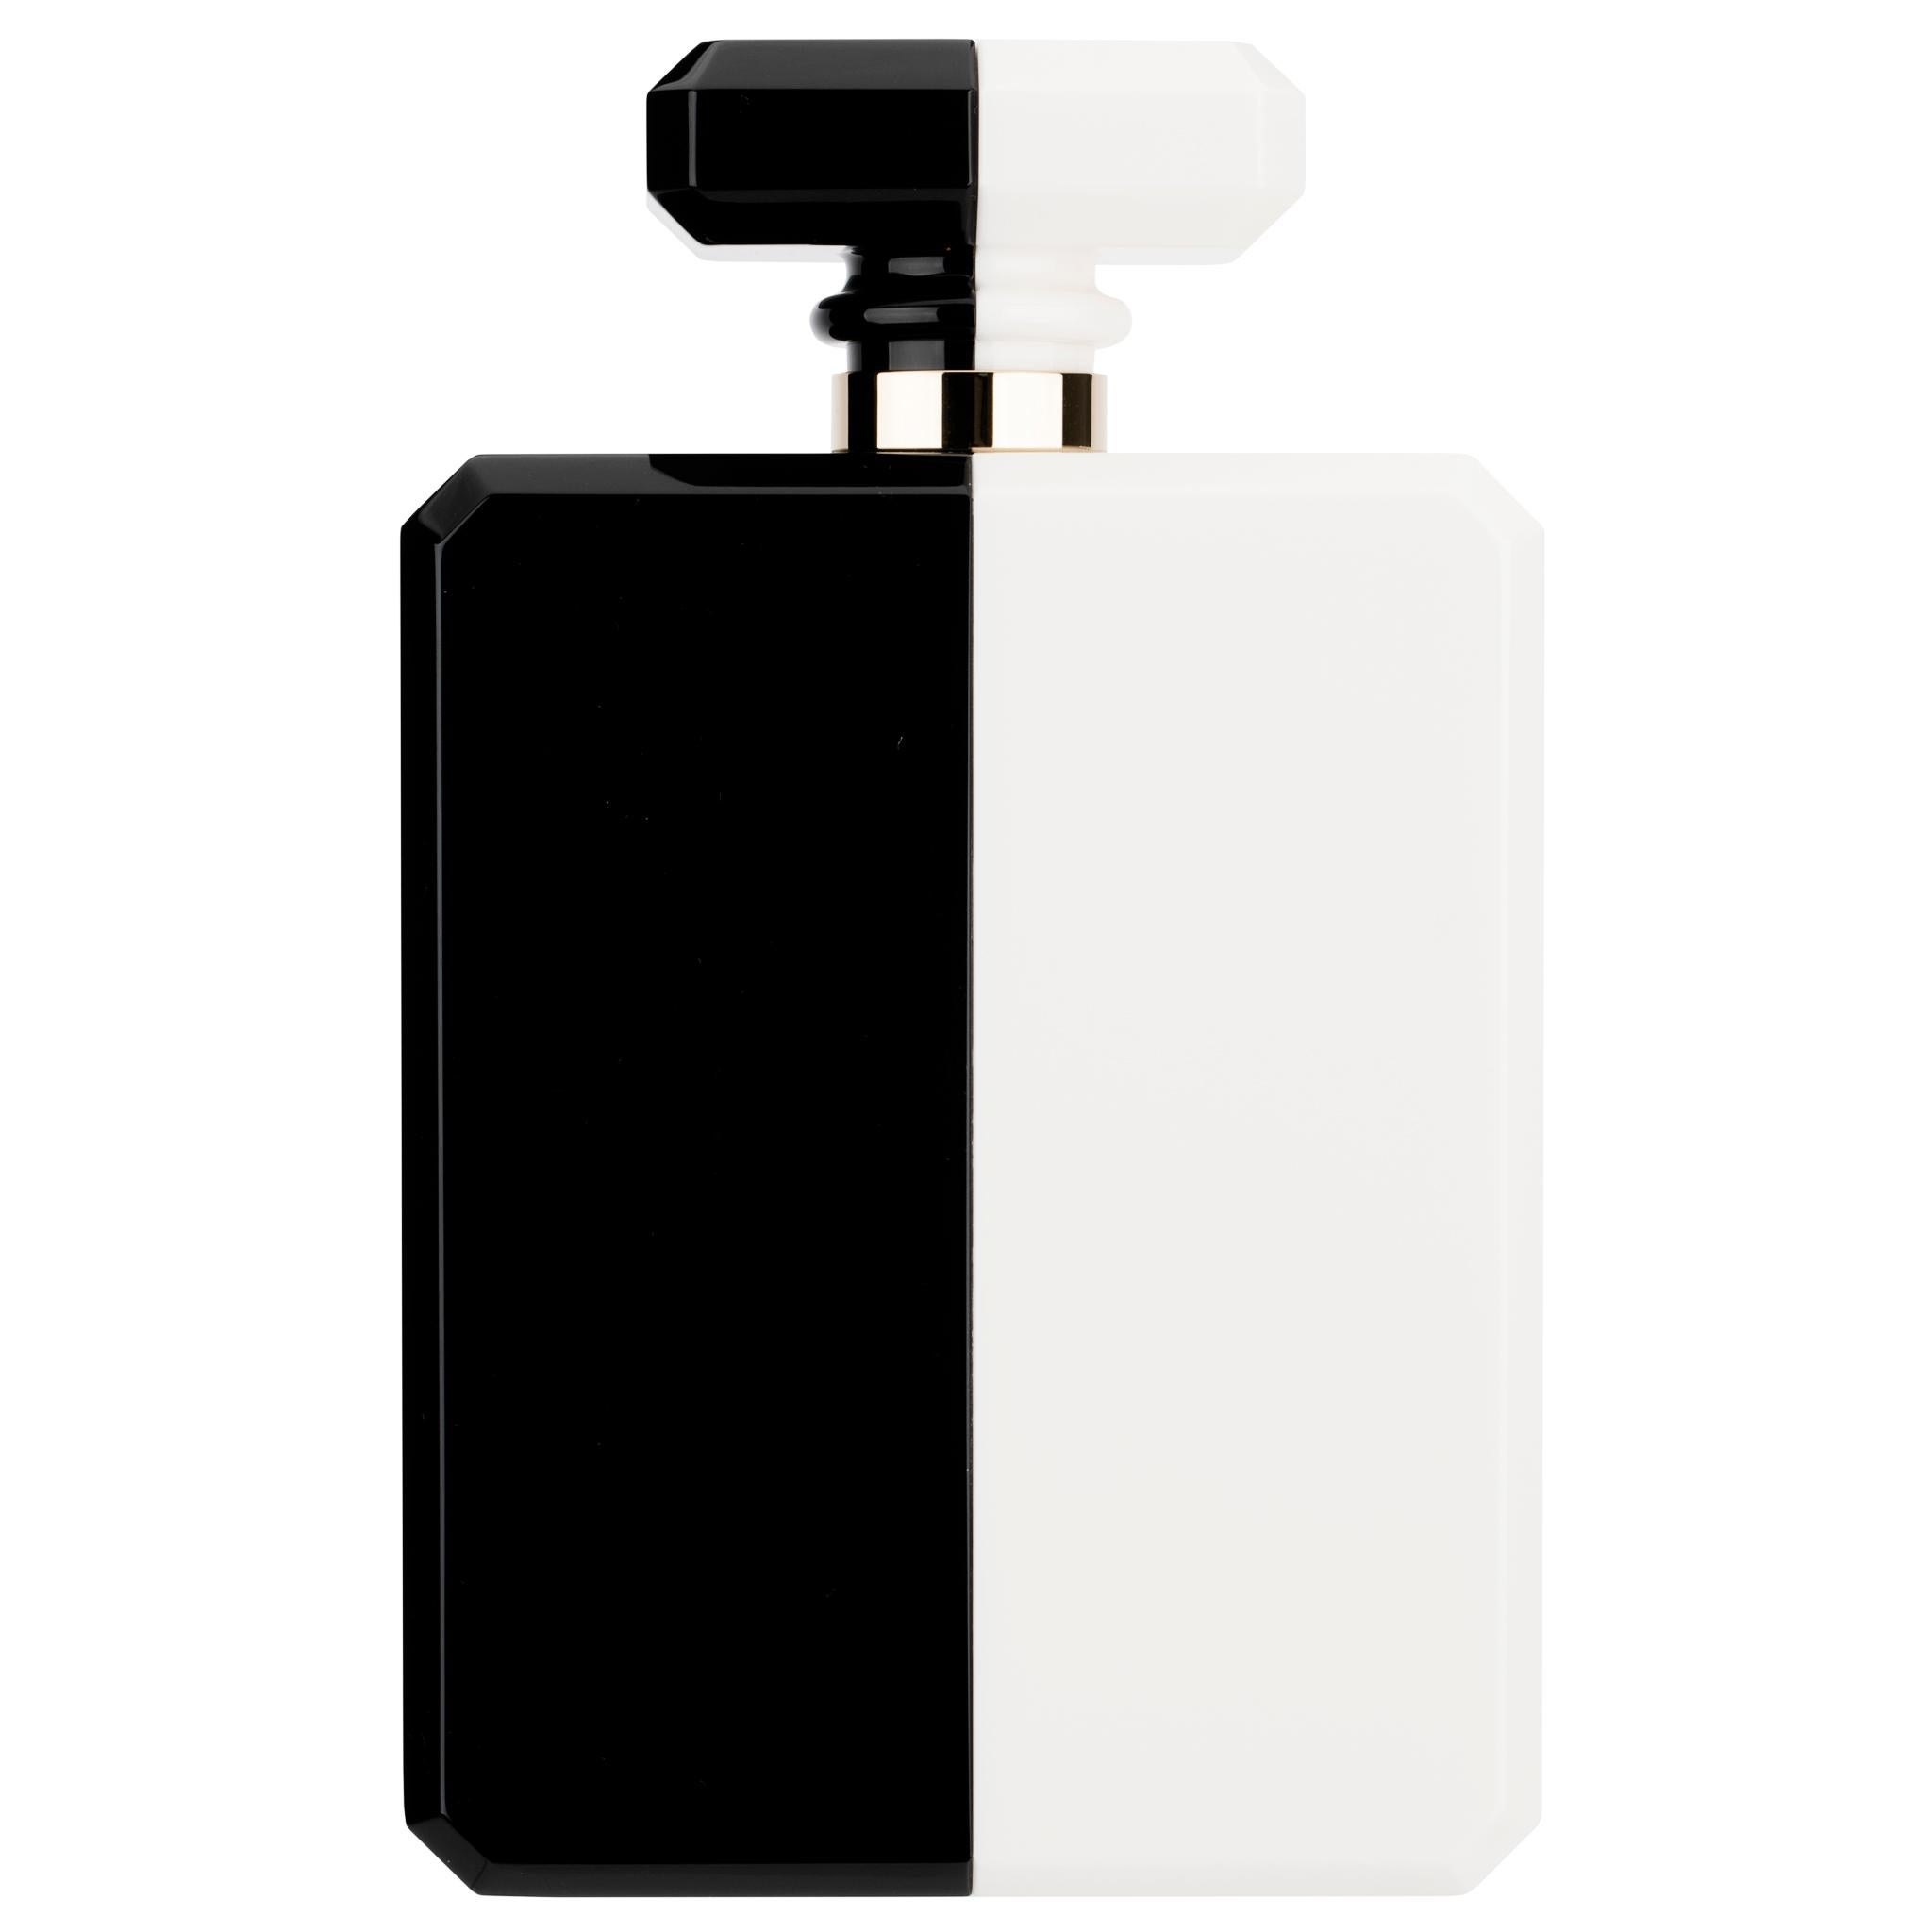 Chanel Minaudière Limited Edition Lucite Perfume Bottle Black & White  1